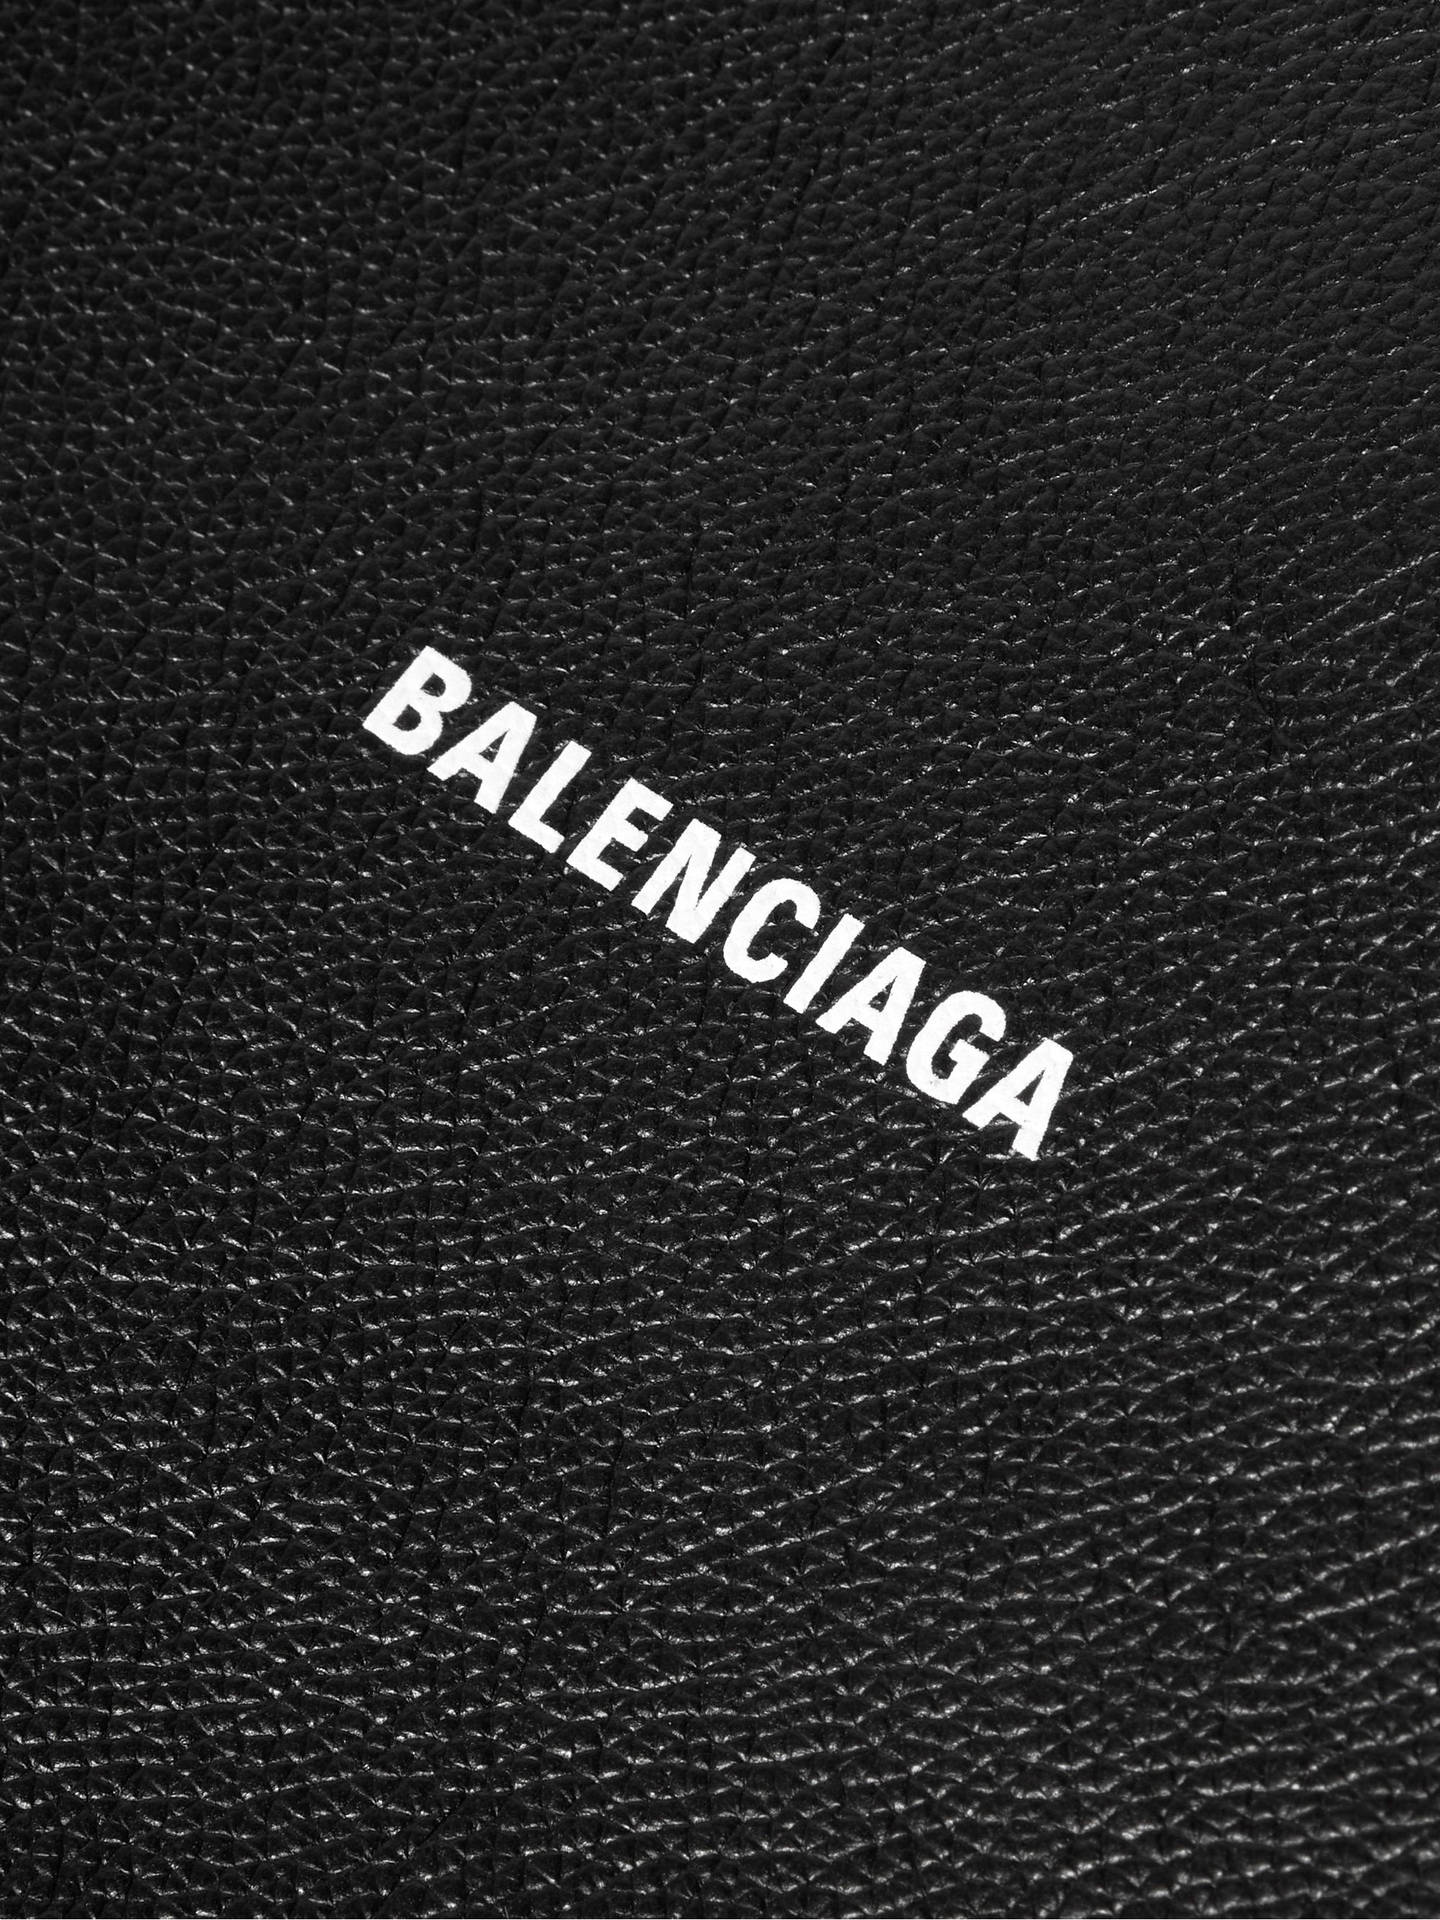 Balenciaga Logo On Leather